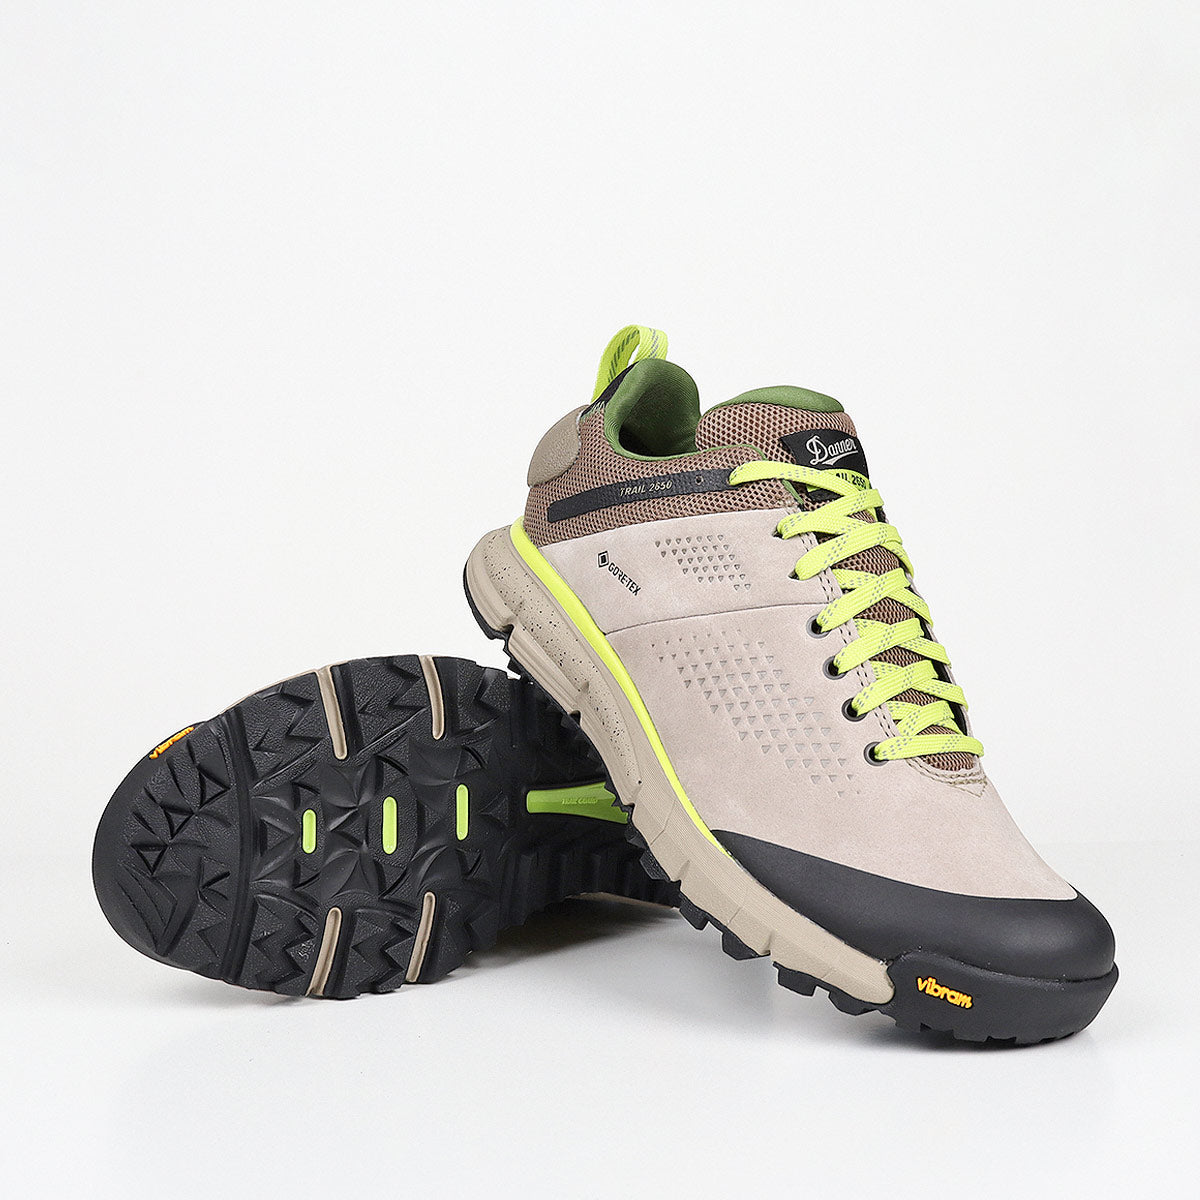 Danner Trail 2650 3" GTX Shoes - D Standard Fit, Tan Meadow Greens GTX, Detail Shot 3